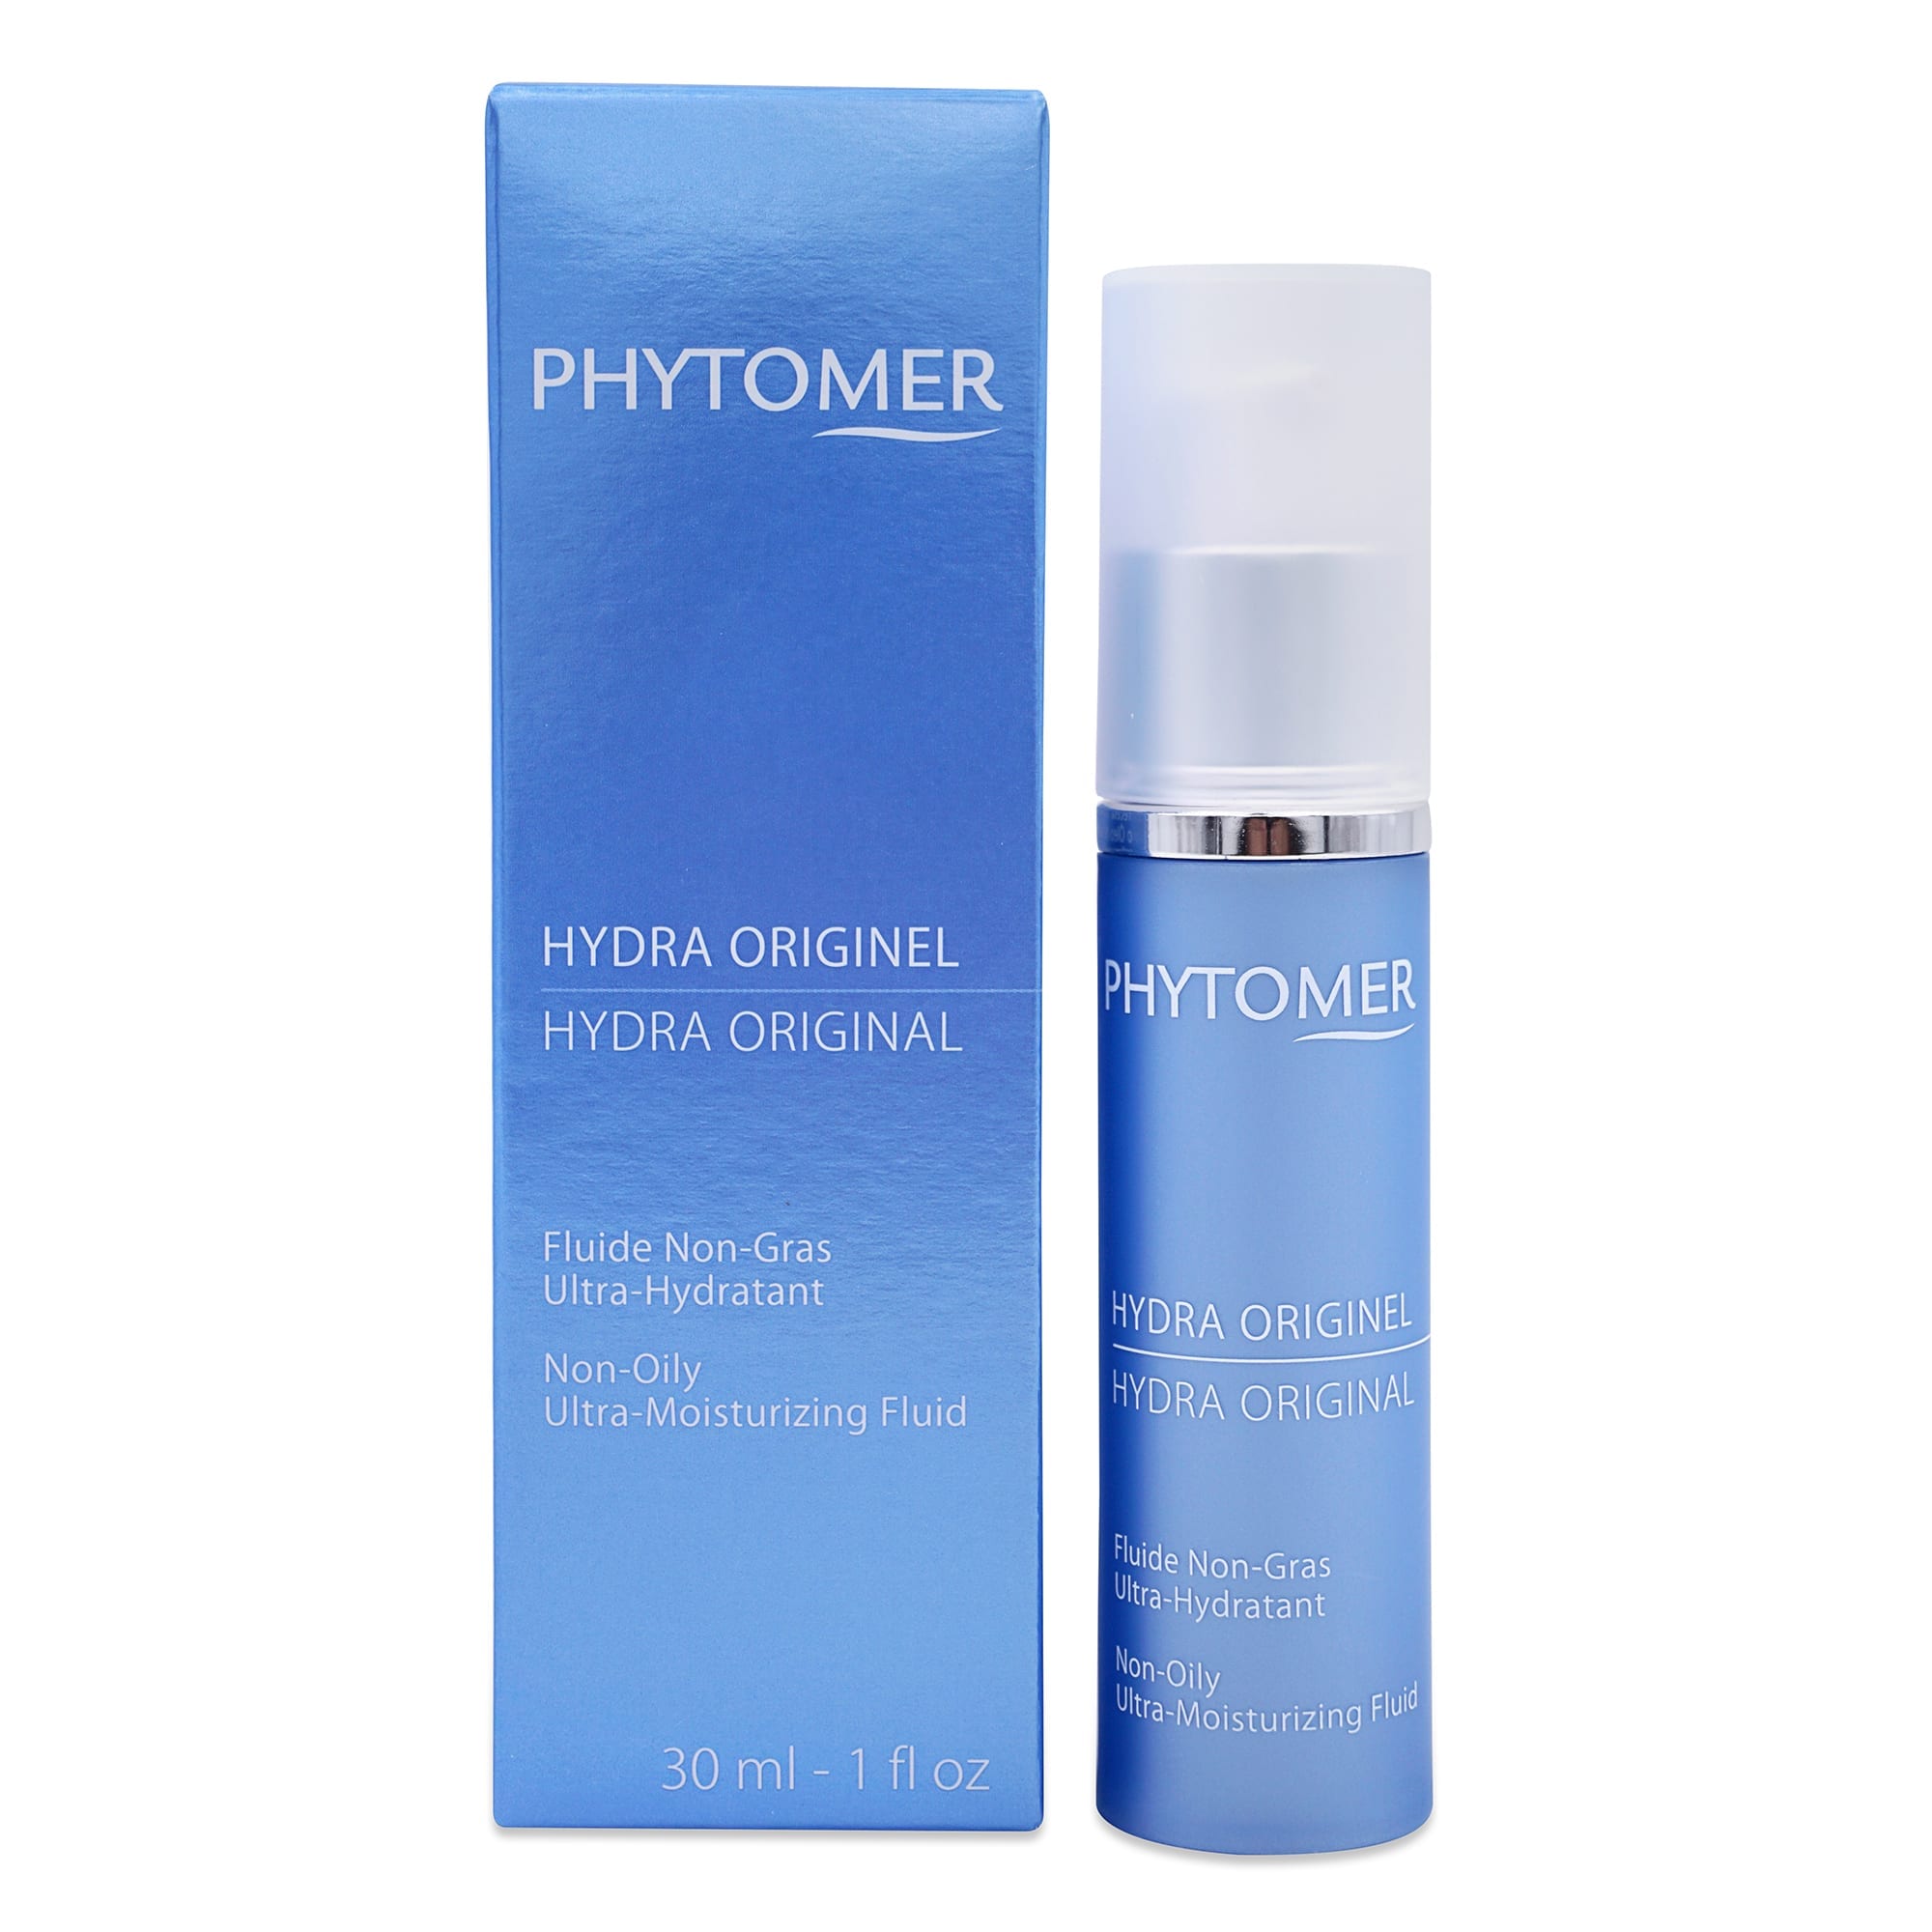 Phytomer Hydra Original Non-Oily Ultra-Moisturizing Fluid, 1 oz.